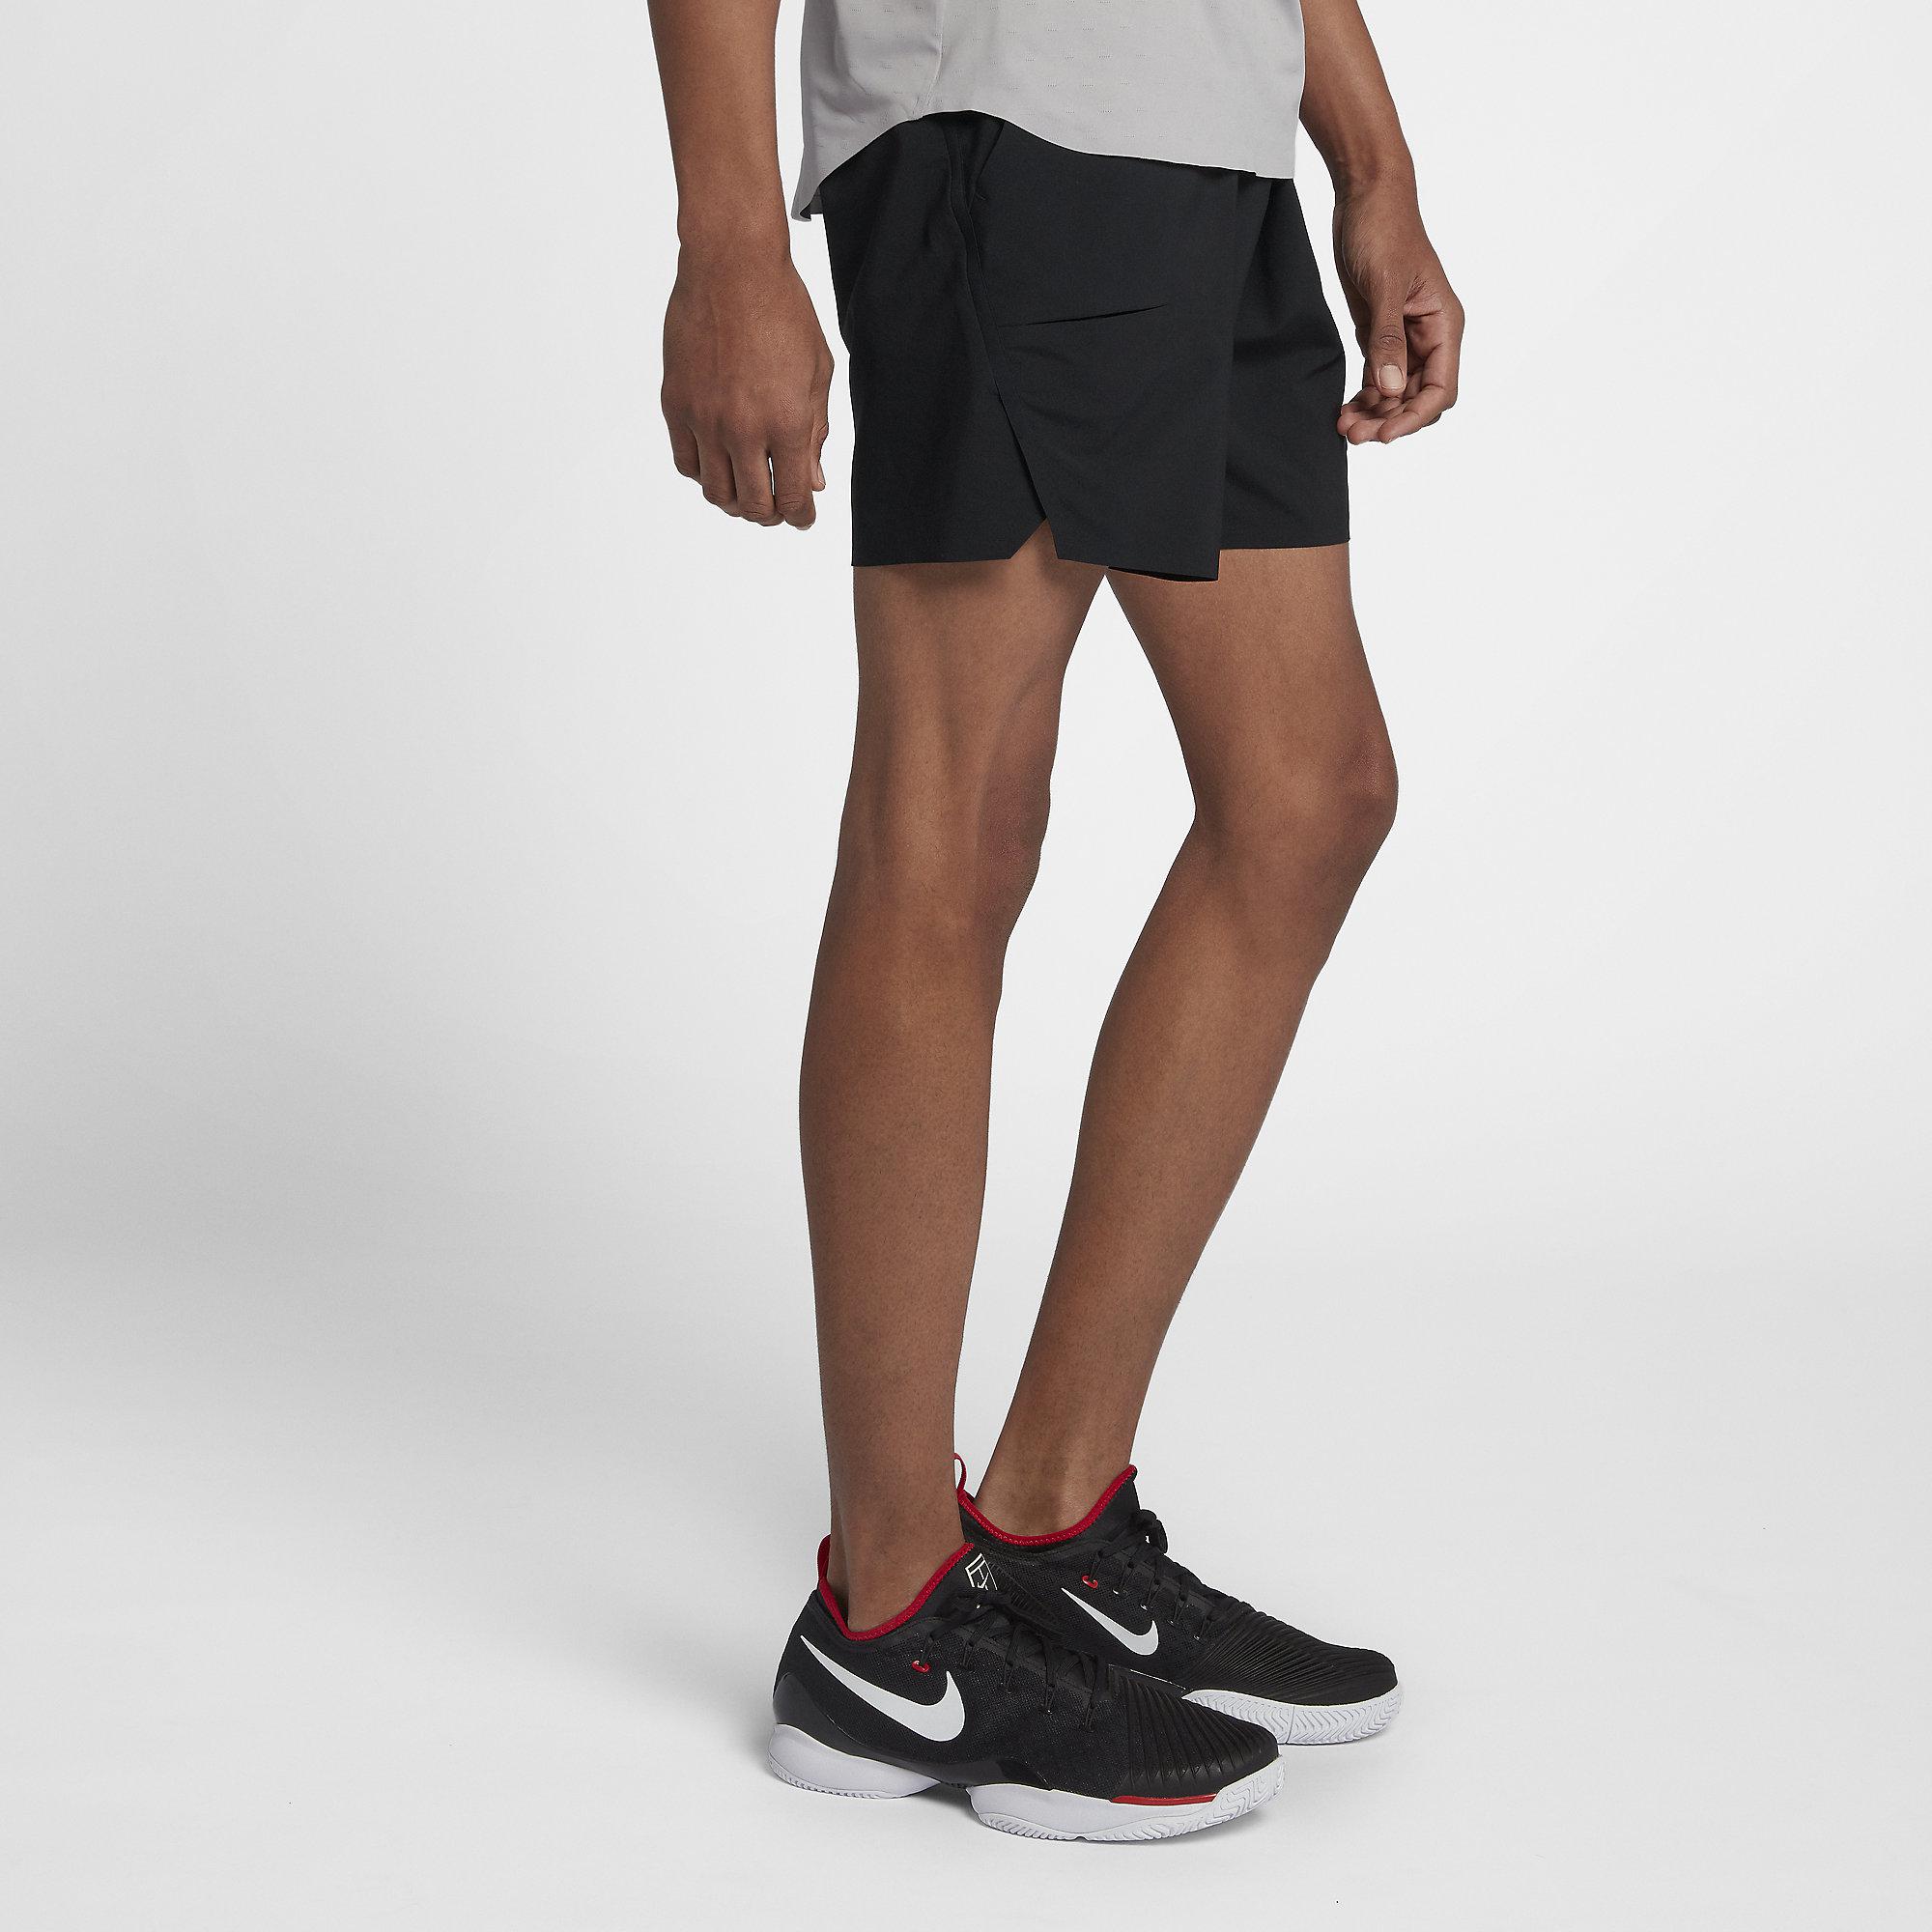 Nike Mens Court Flex Ace 7 Inch Shorts - Black - Tennisnuts.com